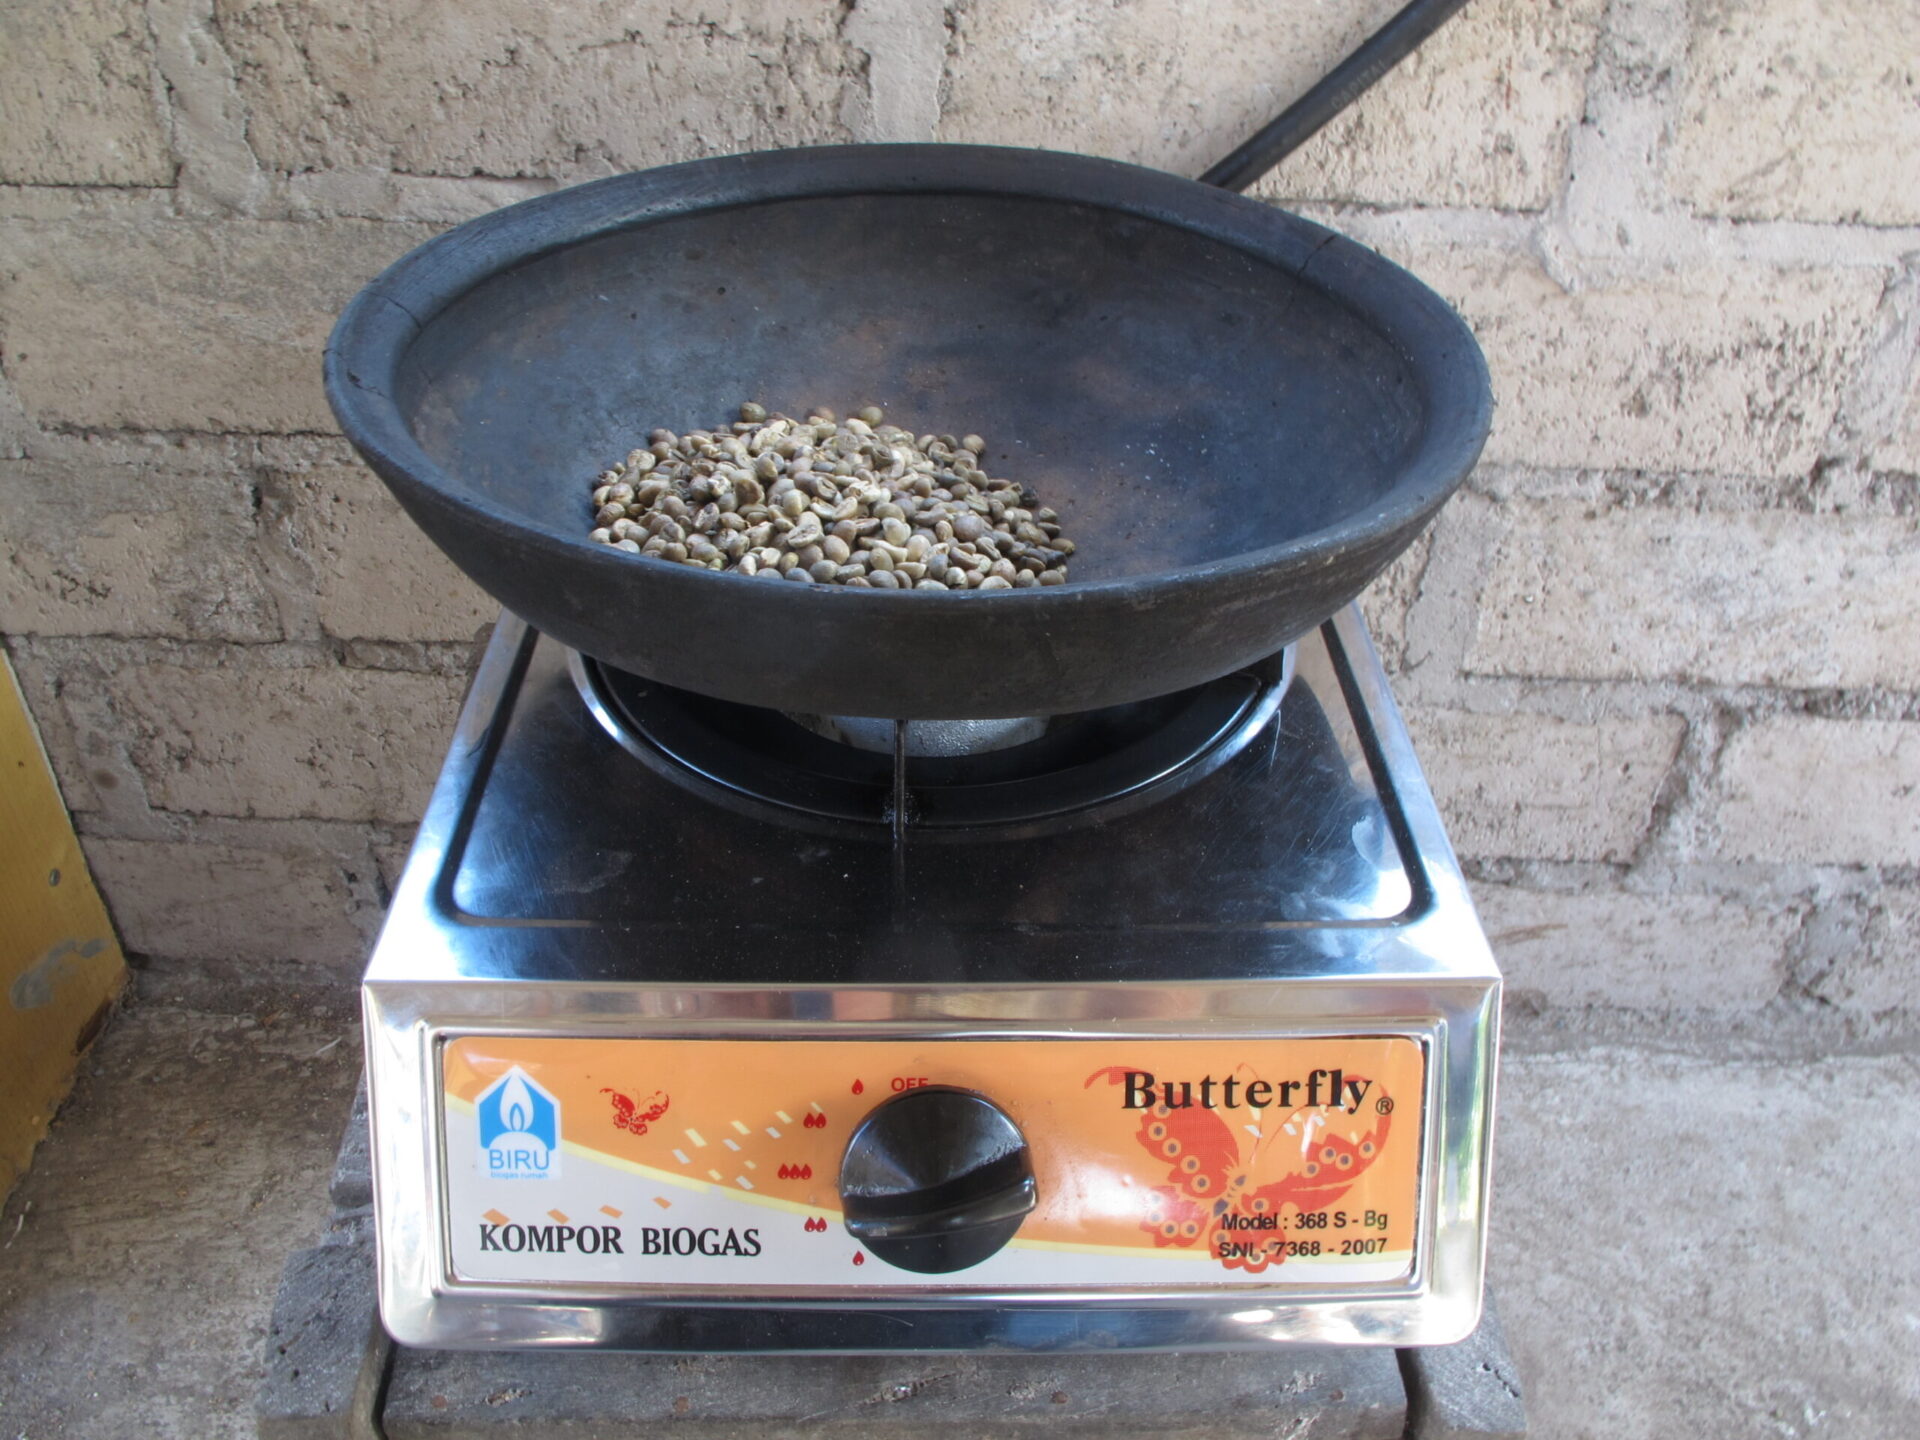 Roasting coffee using biogas.